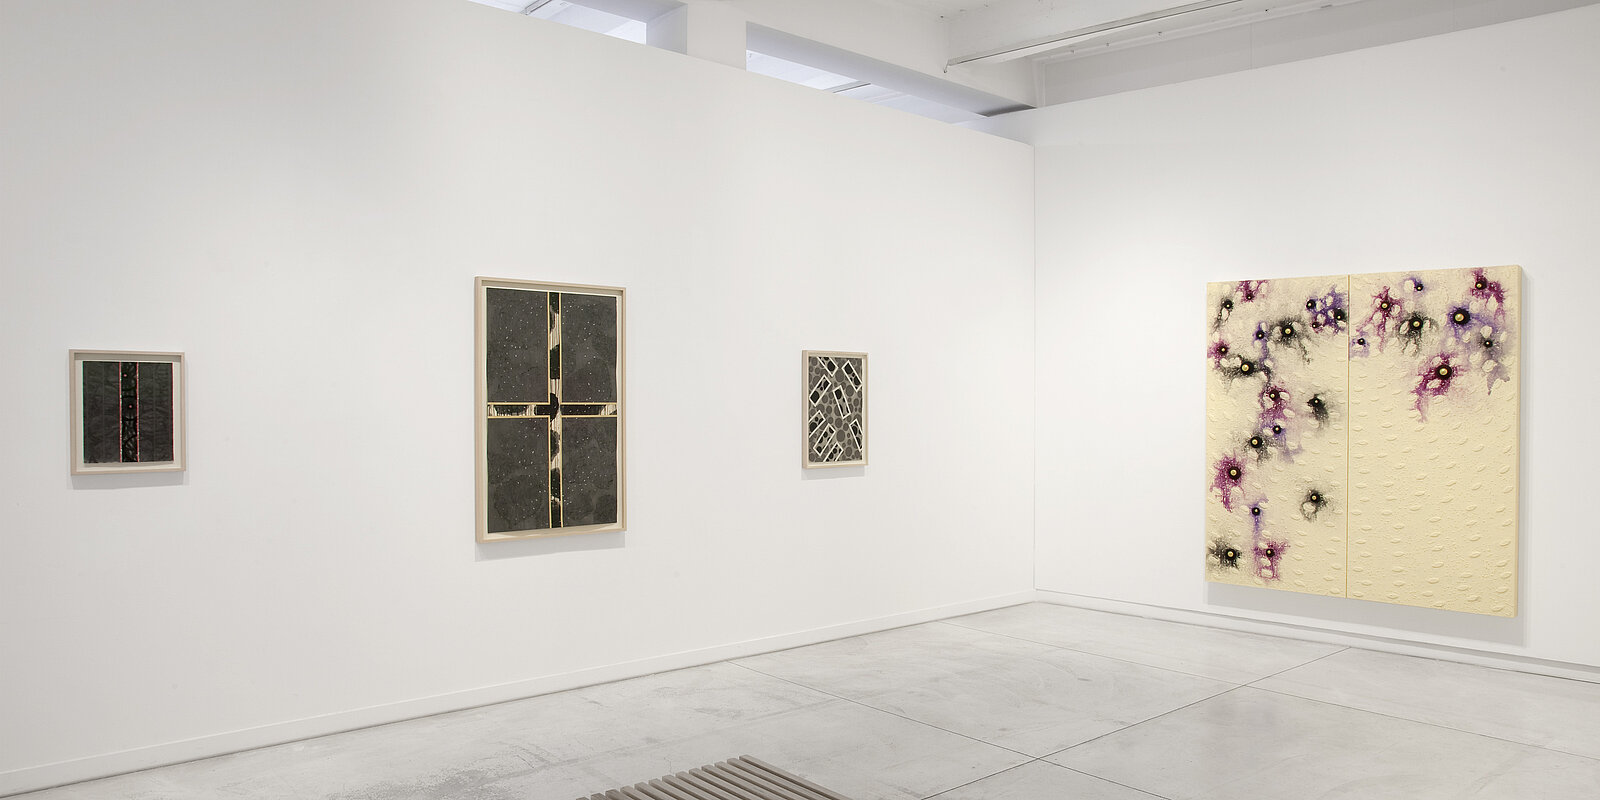 Vue d'installation, Carole Seborovski, Galerie Karsten Greve Cologne, 2020. Photo: Lisa Busche